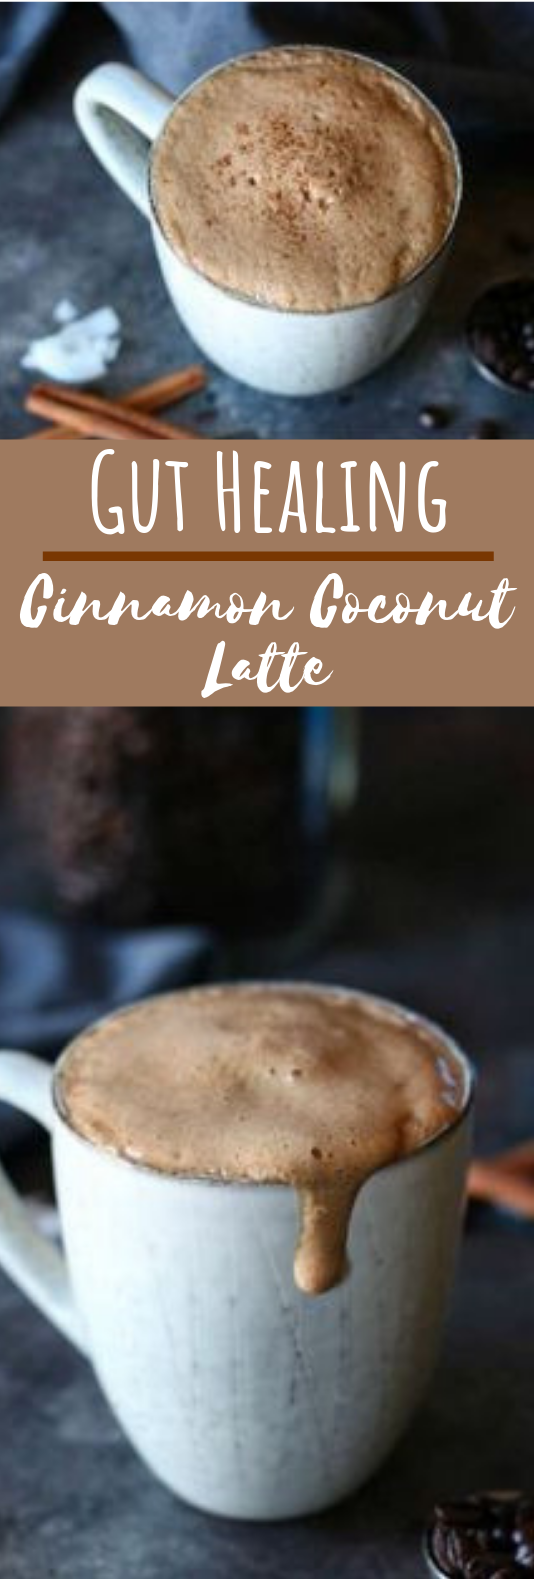 Cinnamon Coconut Latte #drinks #latte